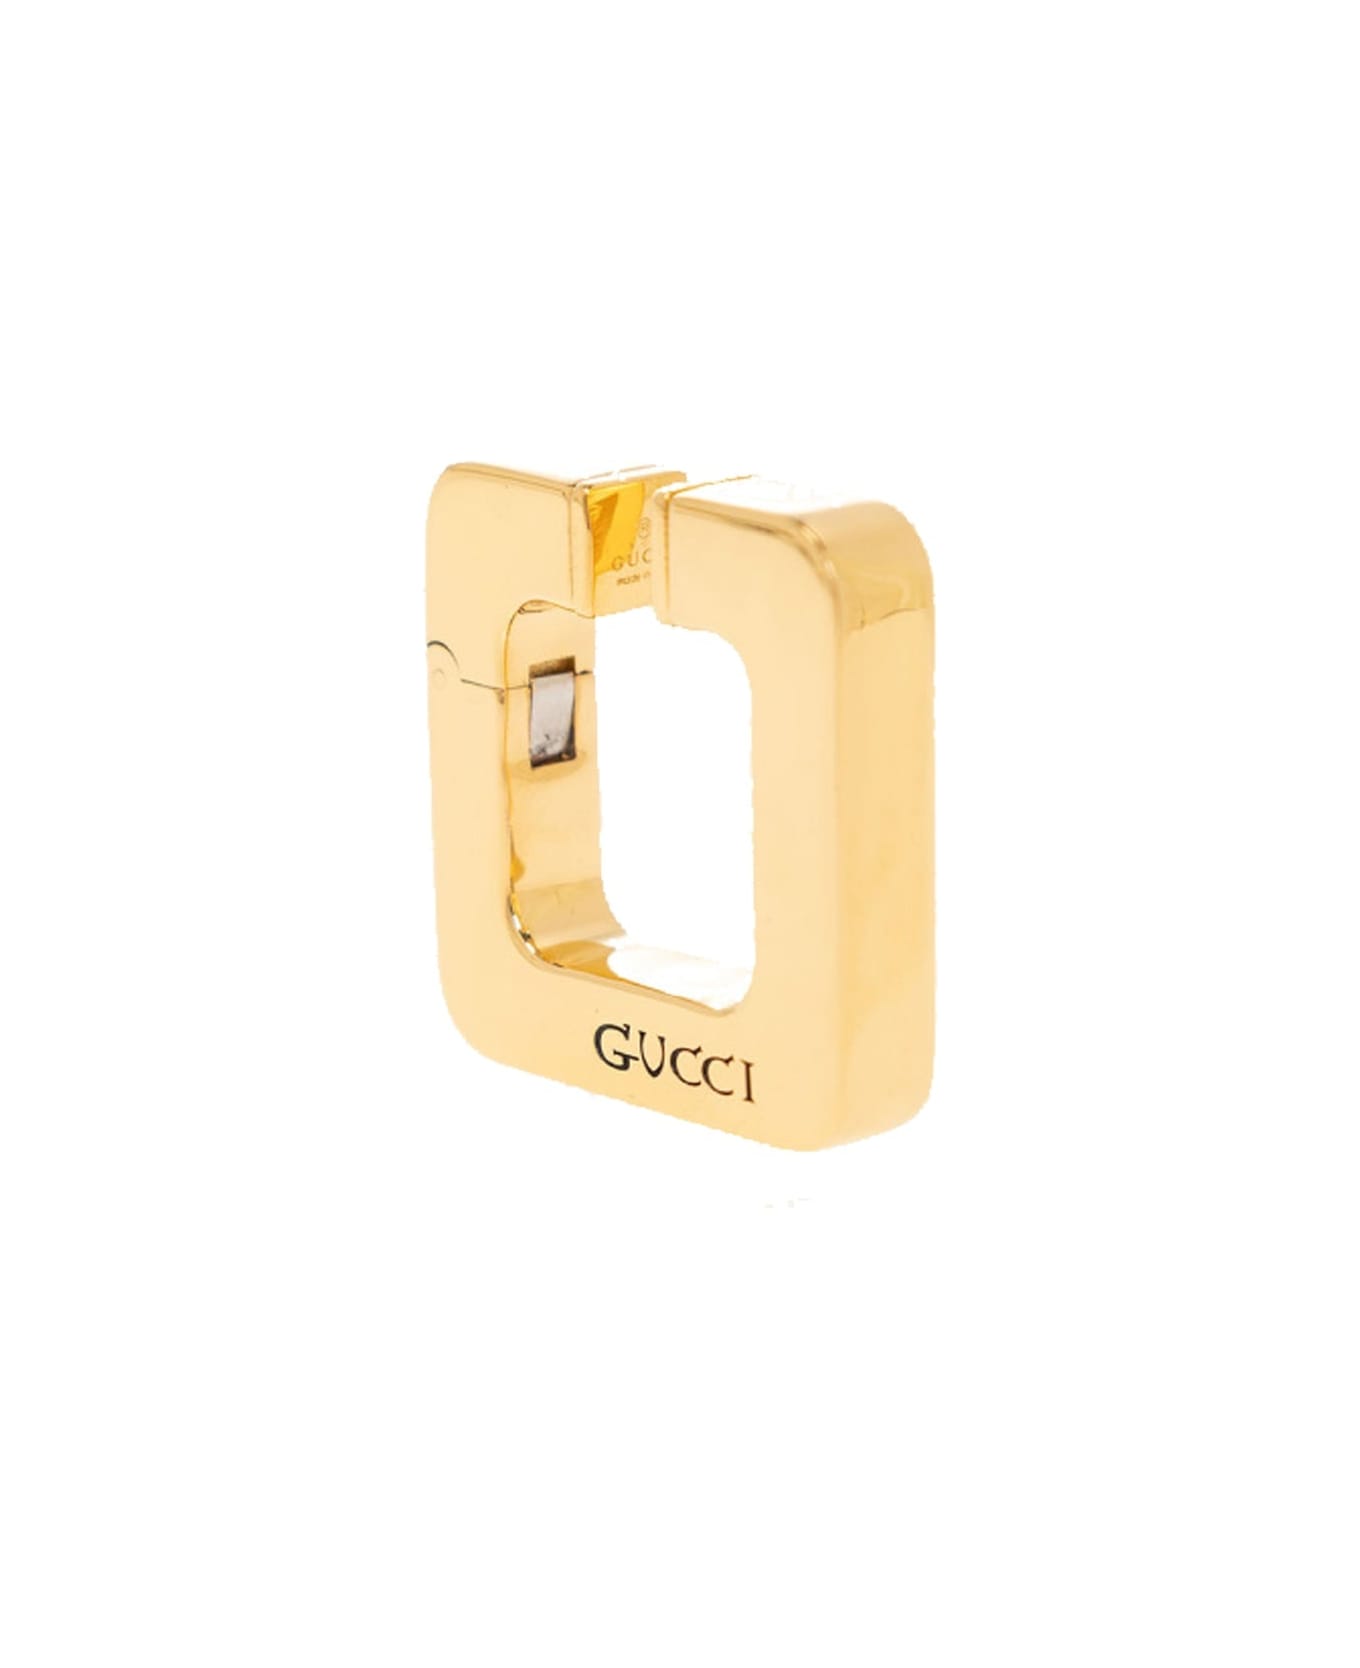 Gucci Logo Cuff Earring - Gold